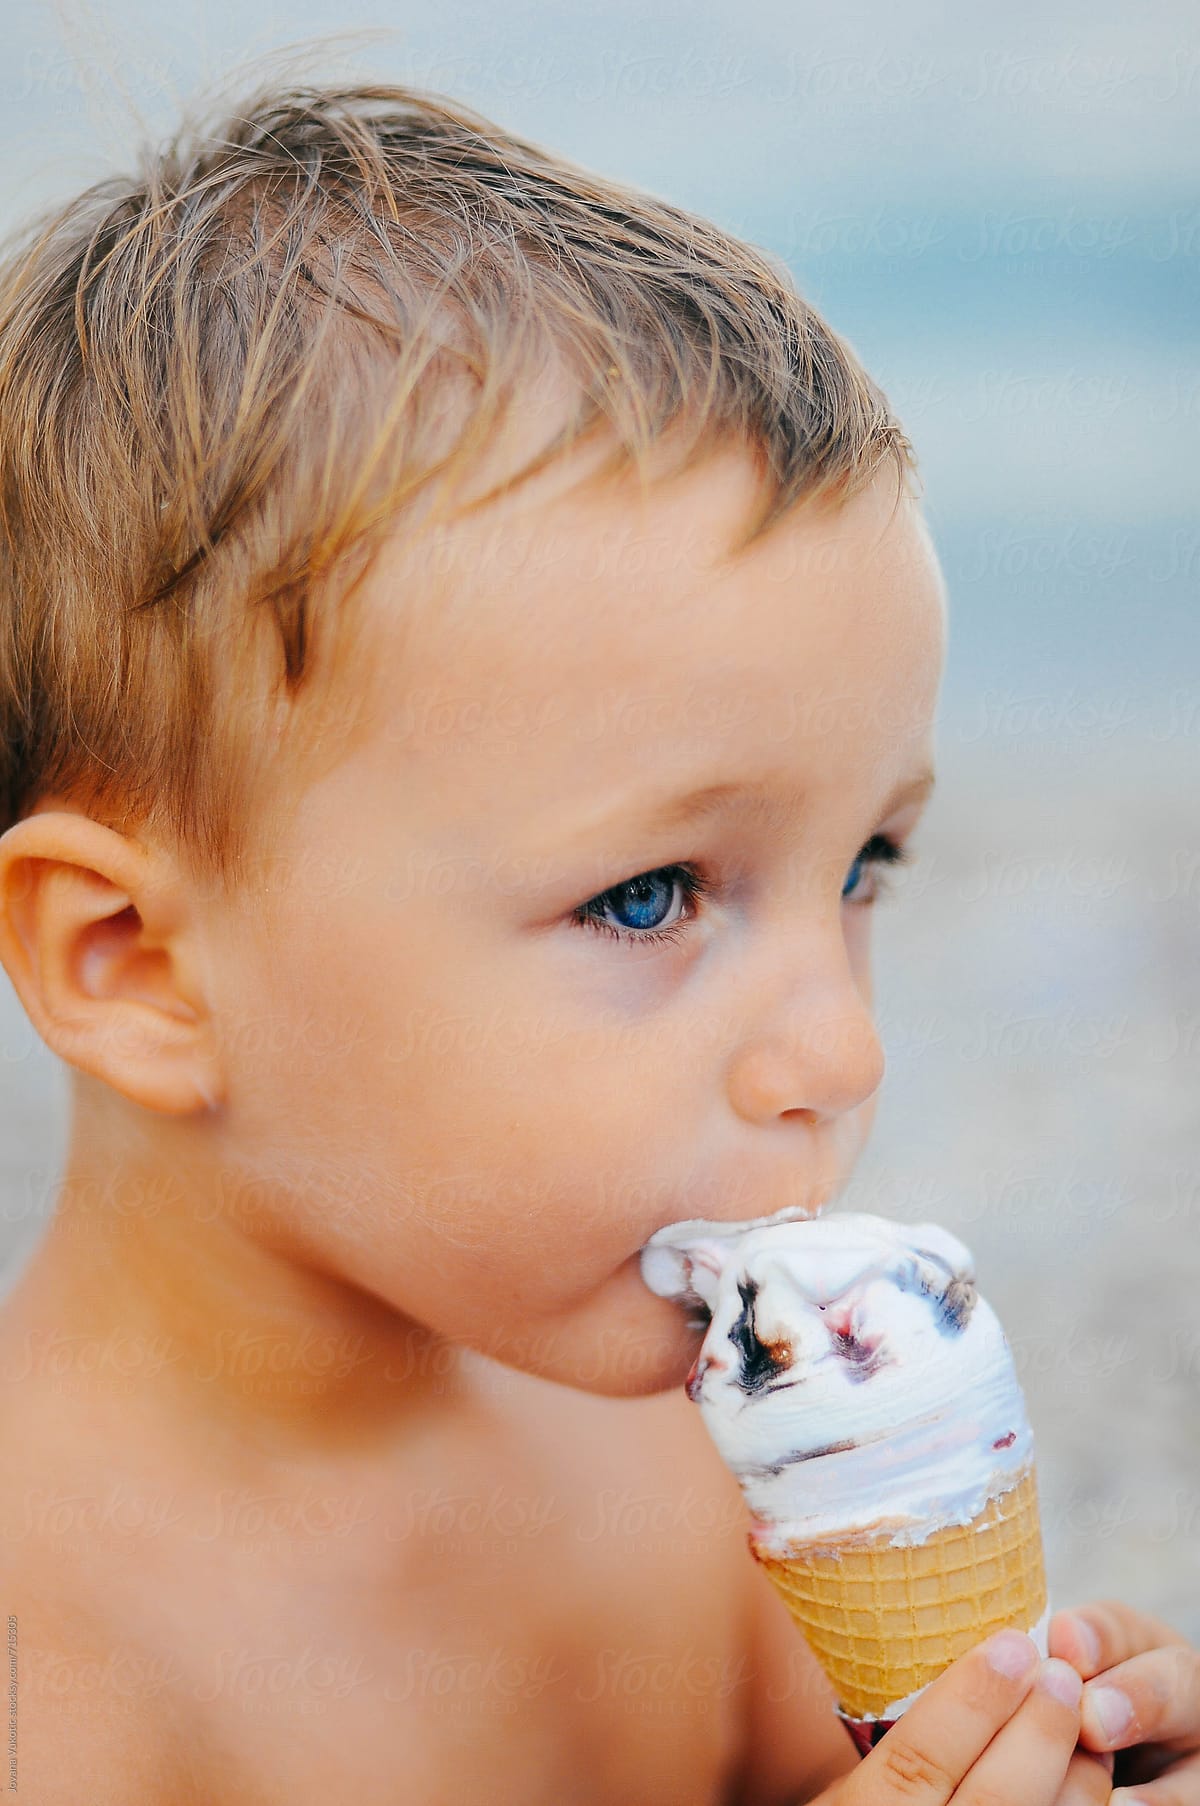 Kid and ice cream